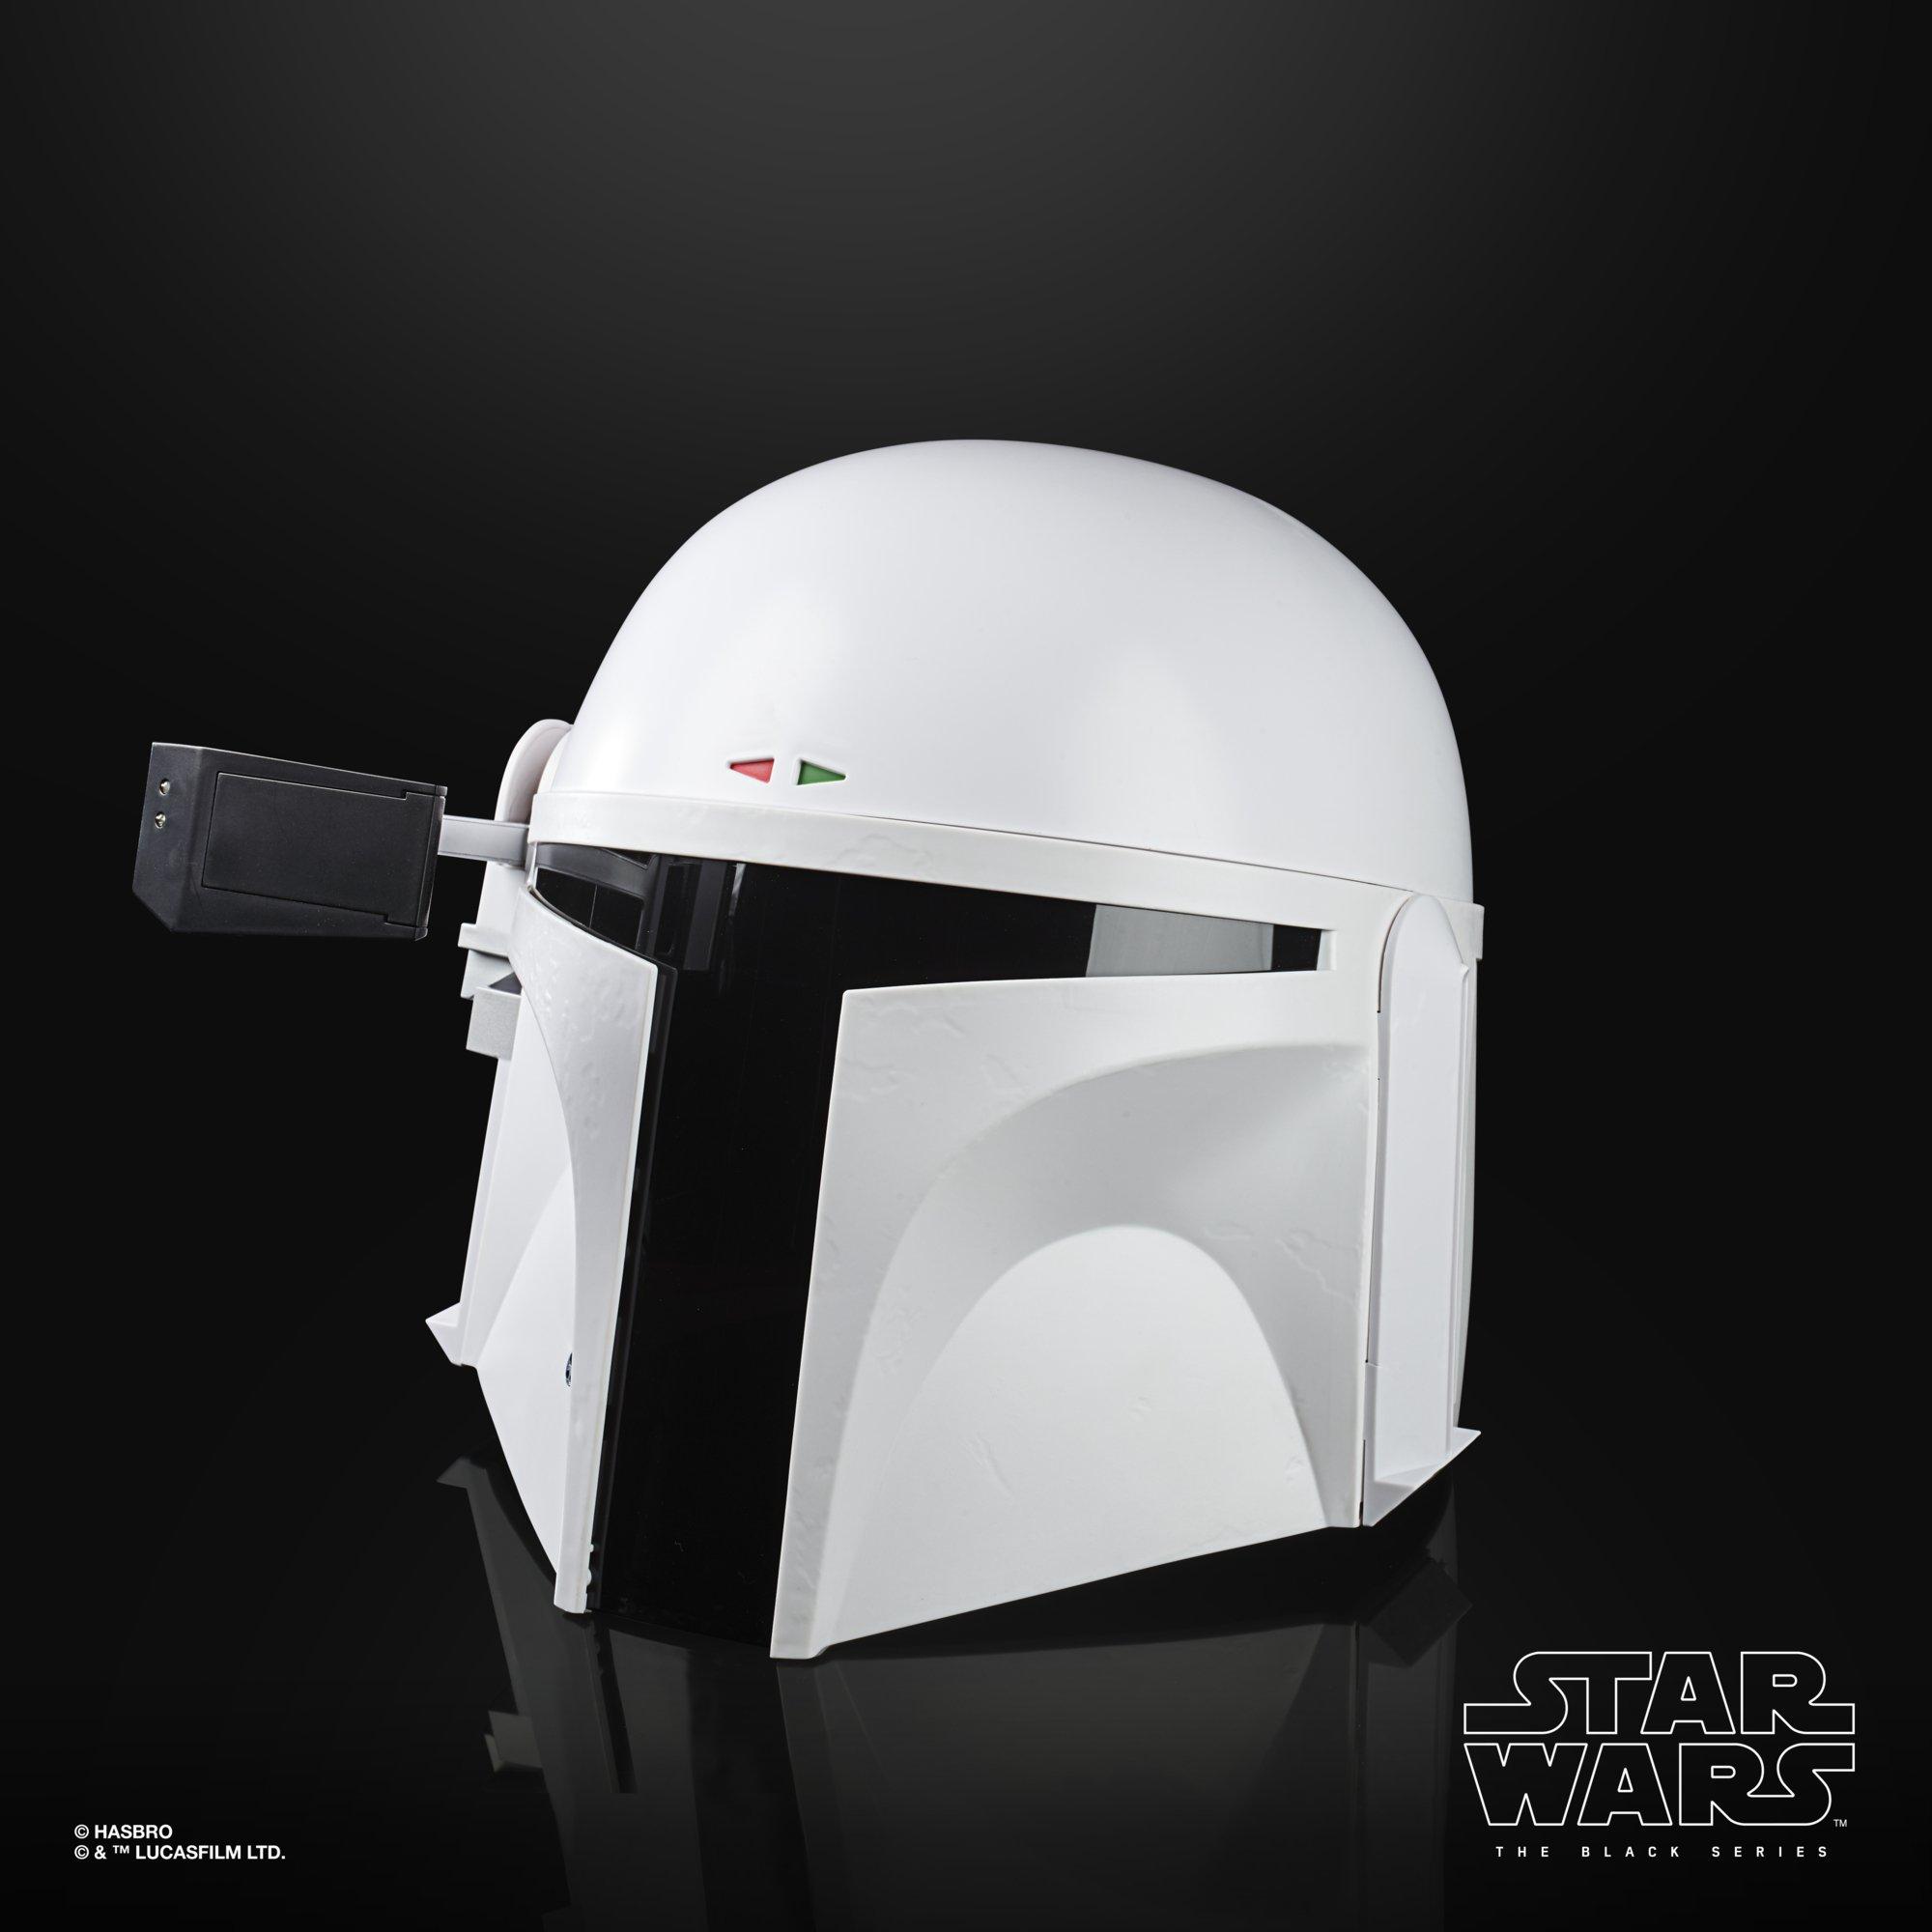 Star Wars The Empire Strikes Back 40th Anniversary Boba Fett Prototype Armor The Black Series Helmet Gamestop